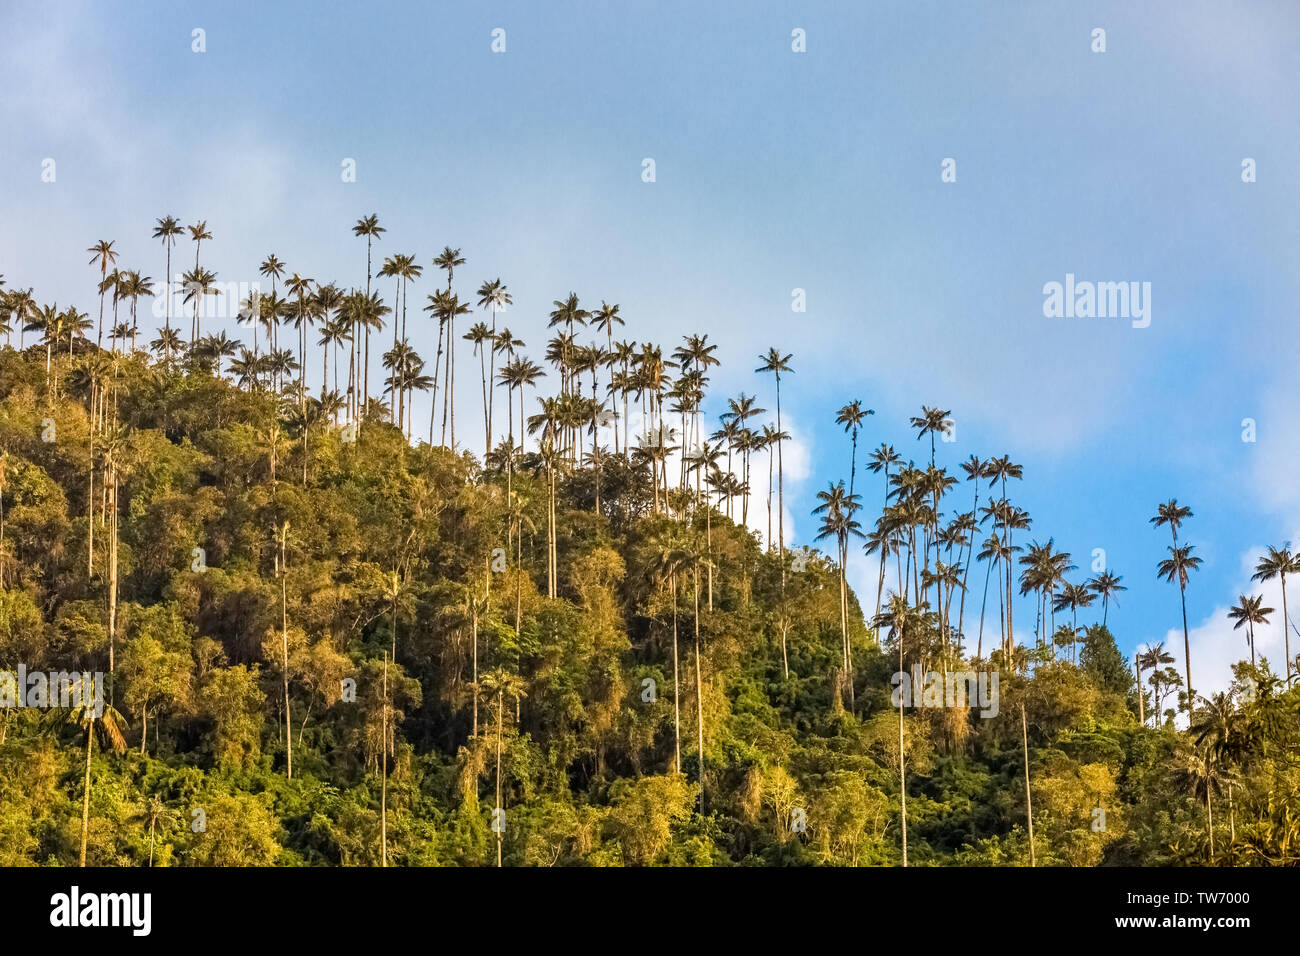 El Bosque de Las Palmas Landschaften von Palmen im Tal in der Nähe von Salento Cocora Quindio in Kolumbien Südamerika Stockfoto